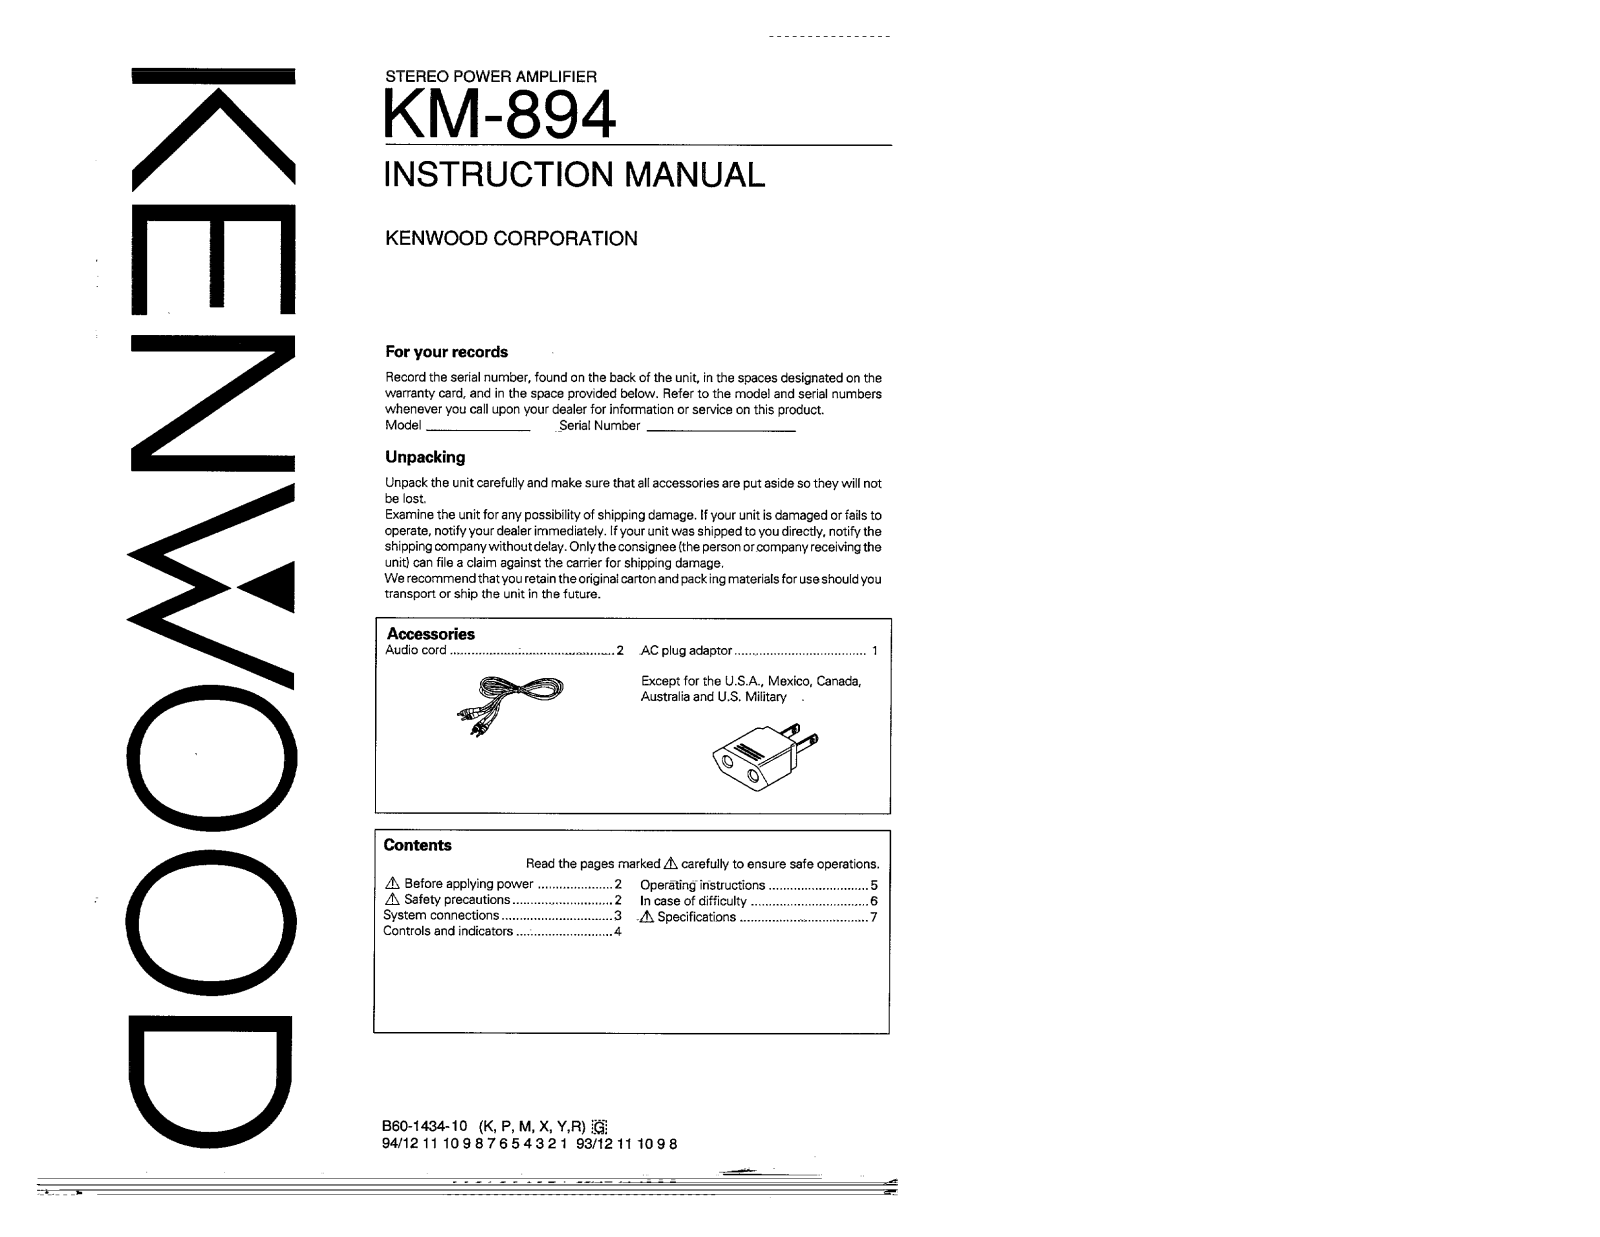 Kenwood KM-894 Owner's Manual